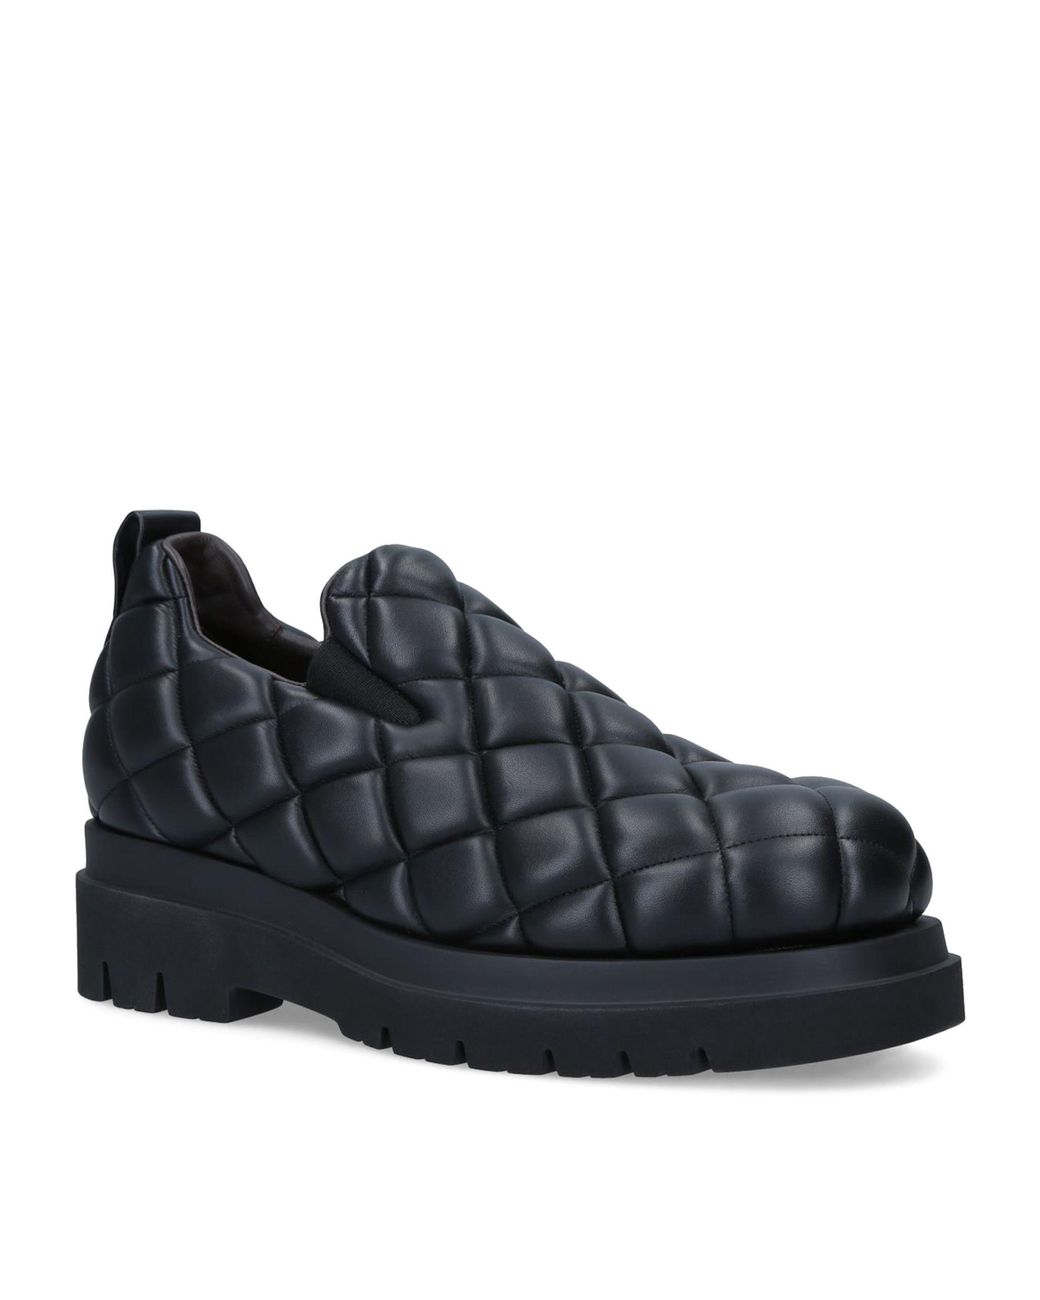 Bottega Veneta Quilted Leather Shoes in Black for Men